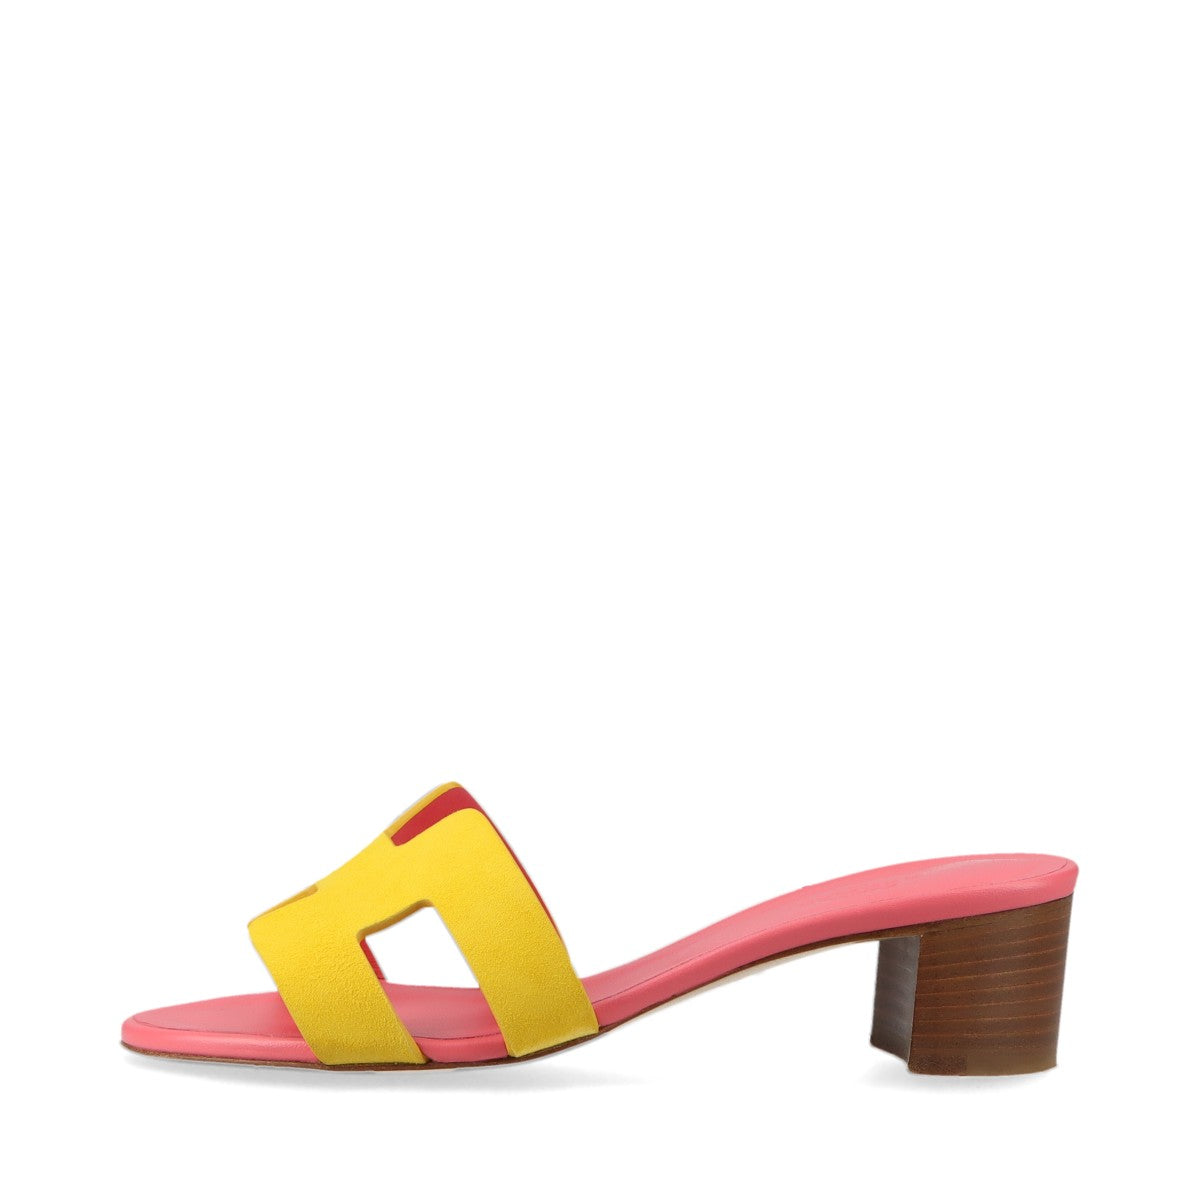 Hermès OASIS Leather & Suede Sandals 34.5 Ladies' Pink x yellow